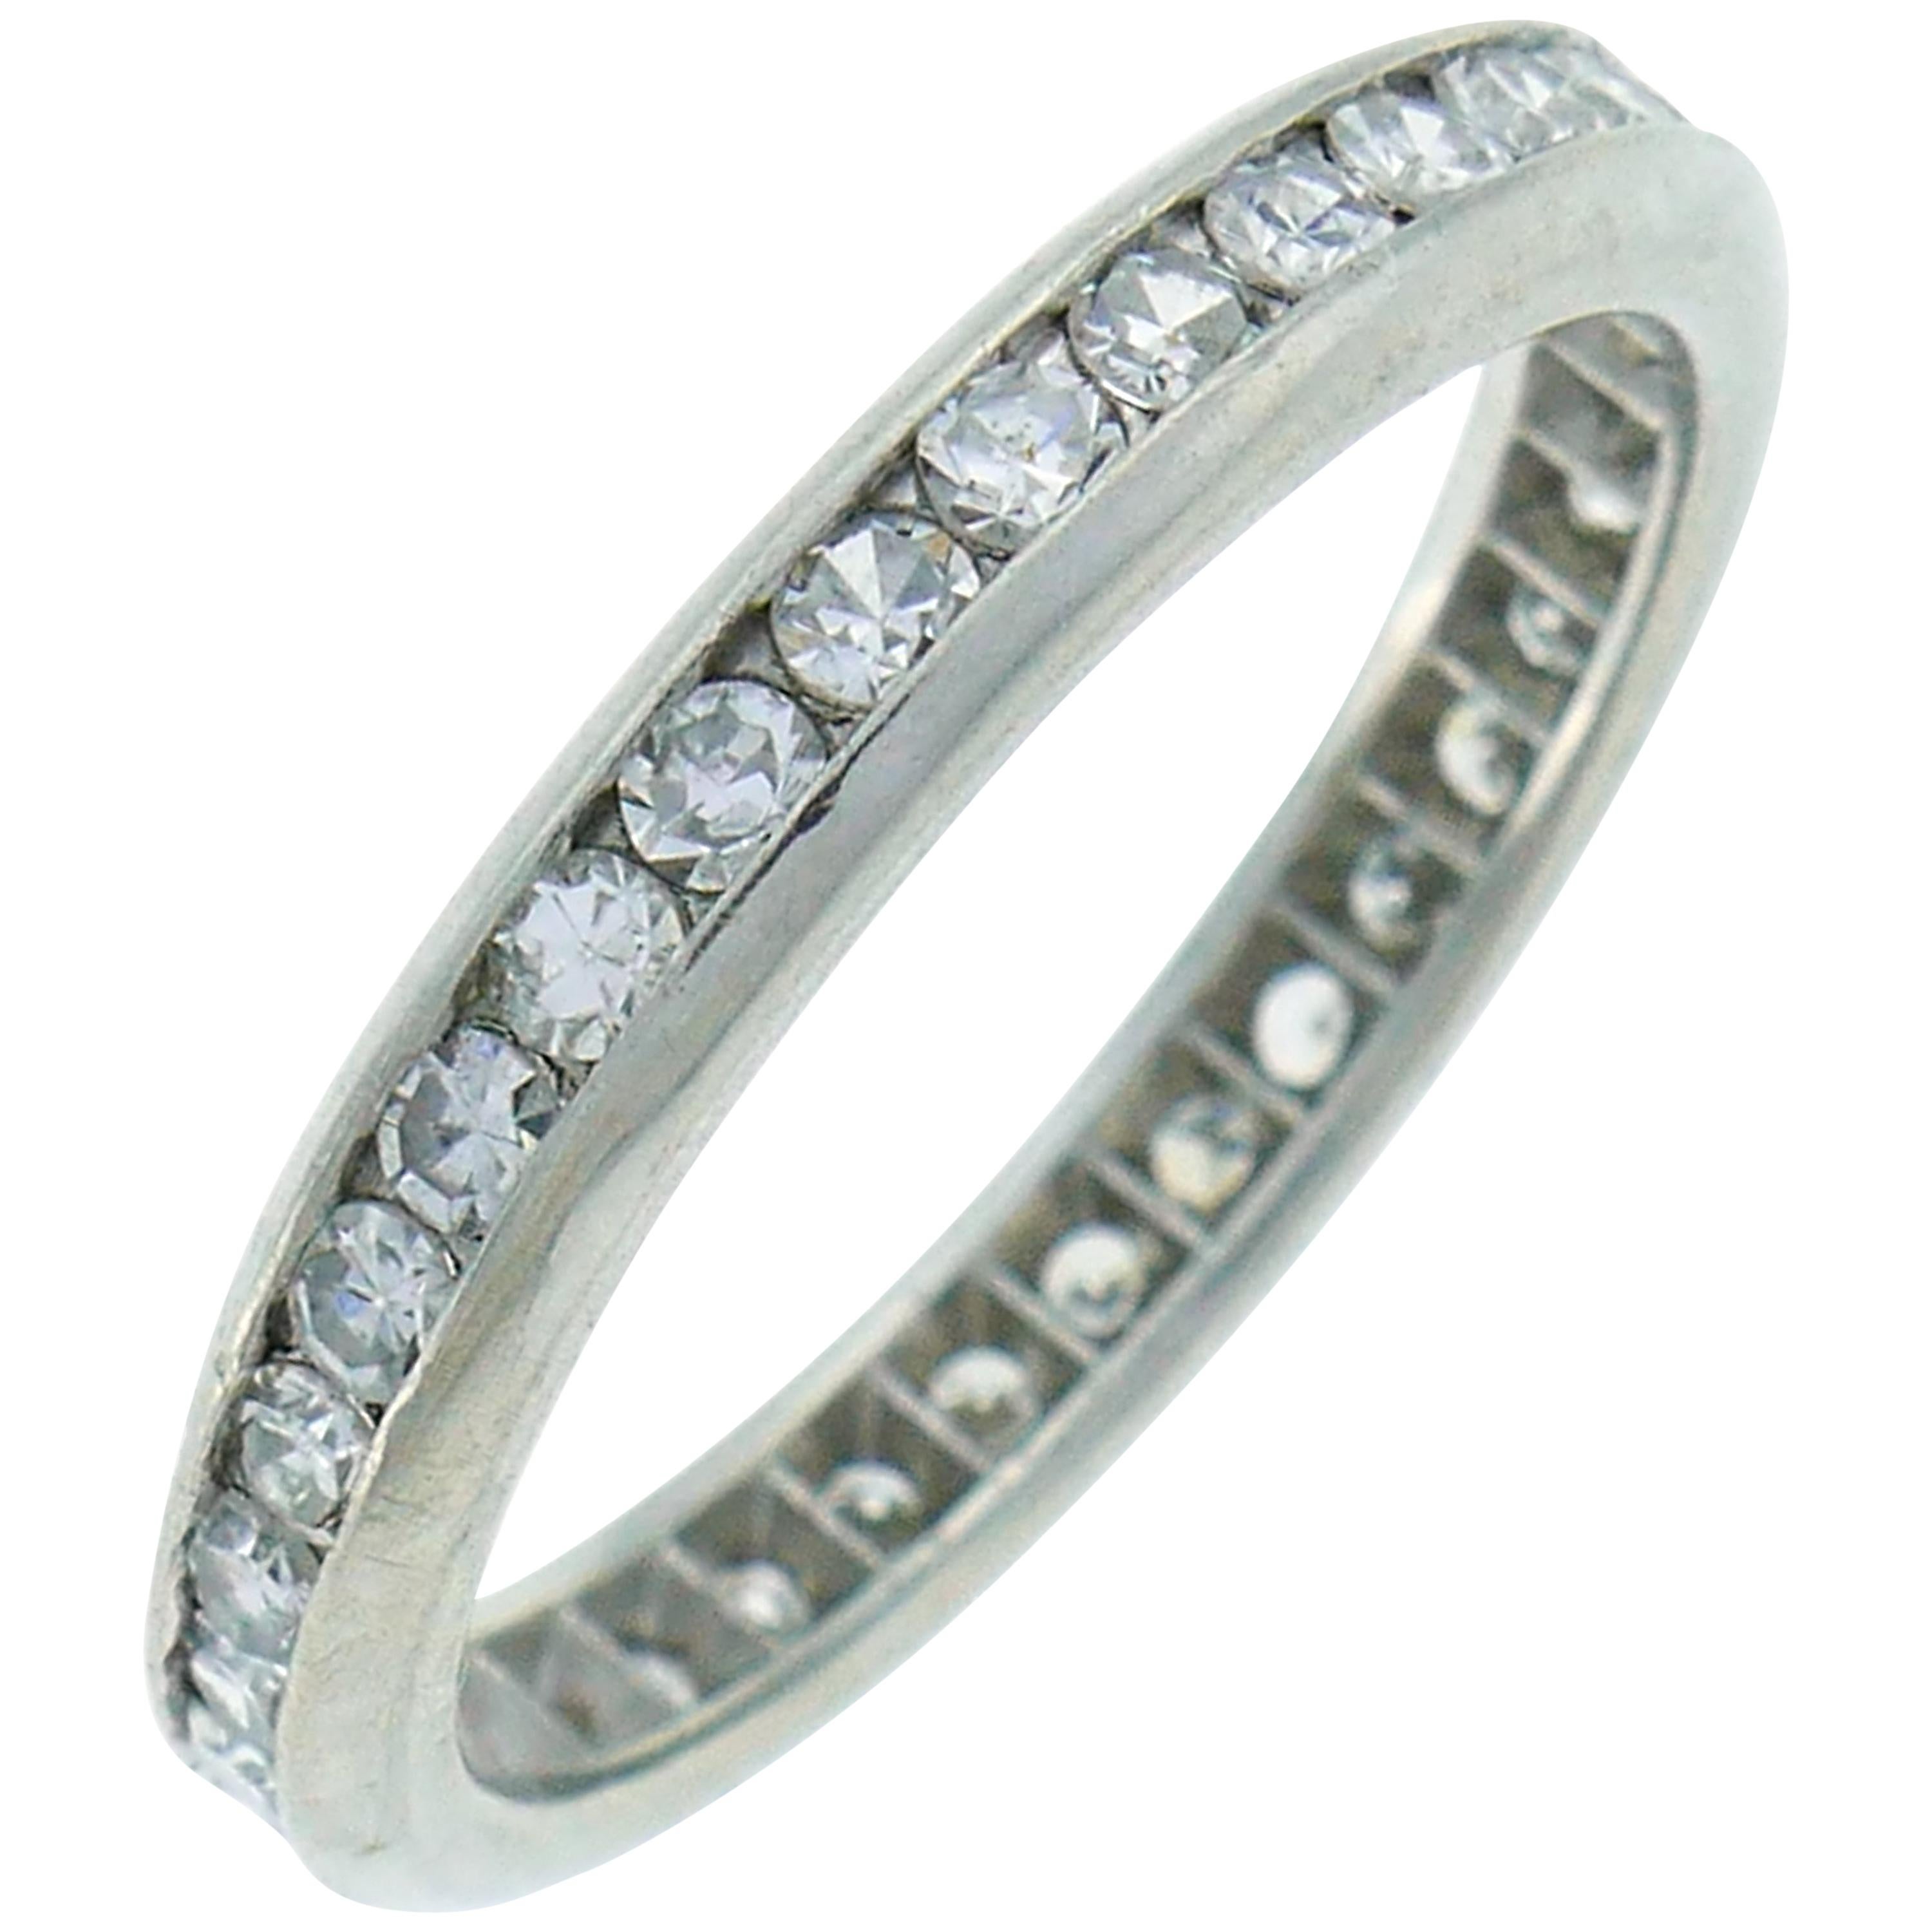 Art Deco Diamond Platinum Eternity Band Ring Single Cut Wedding Size 6.75